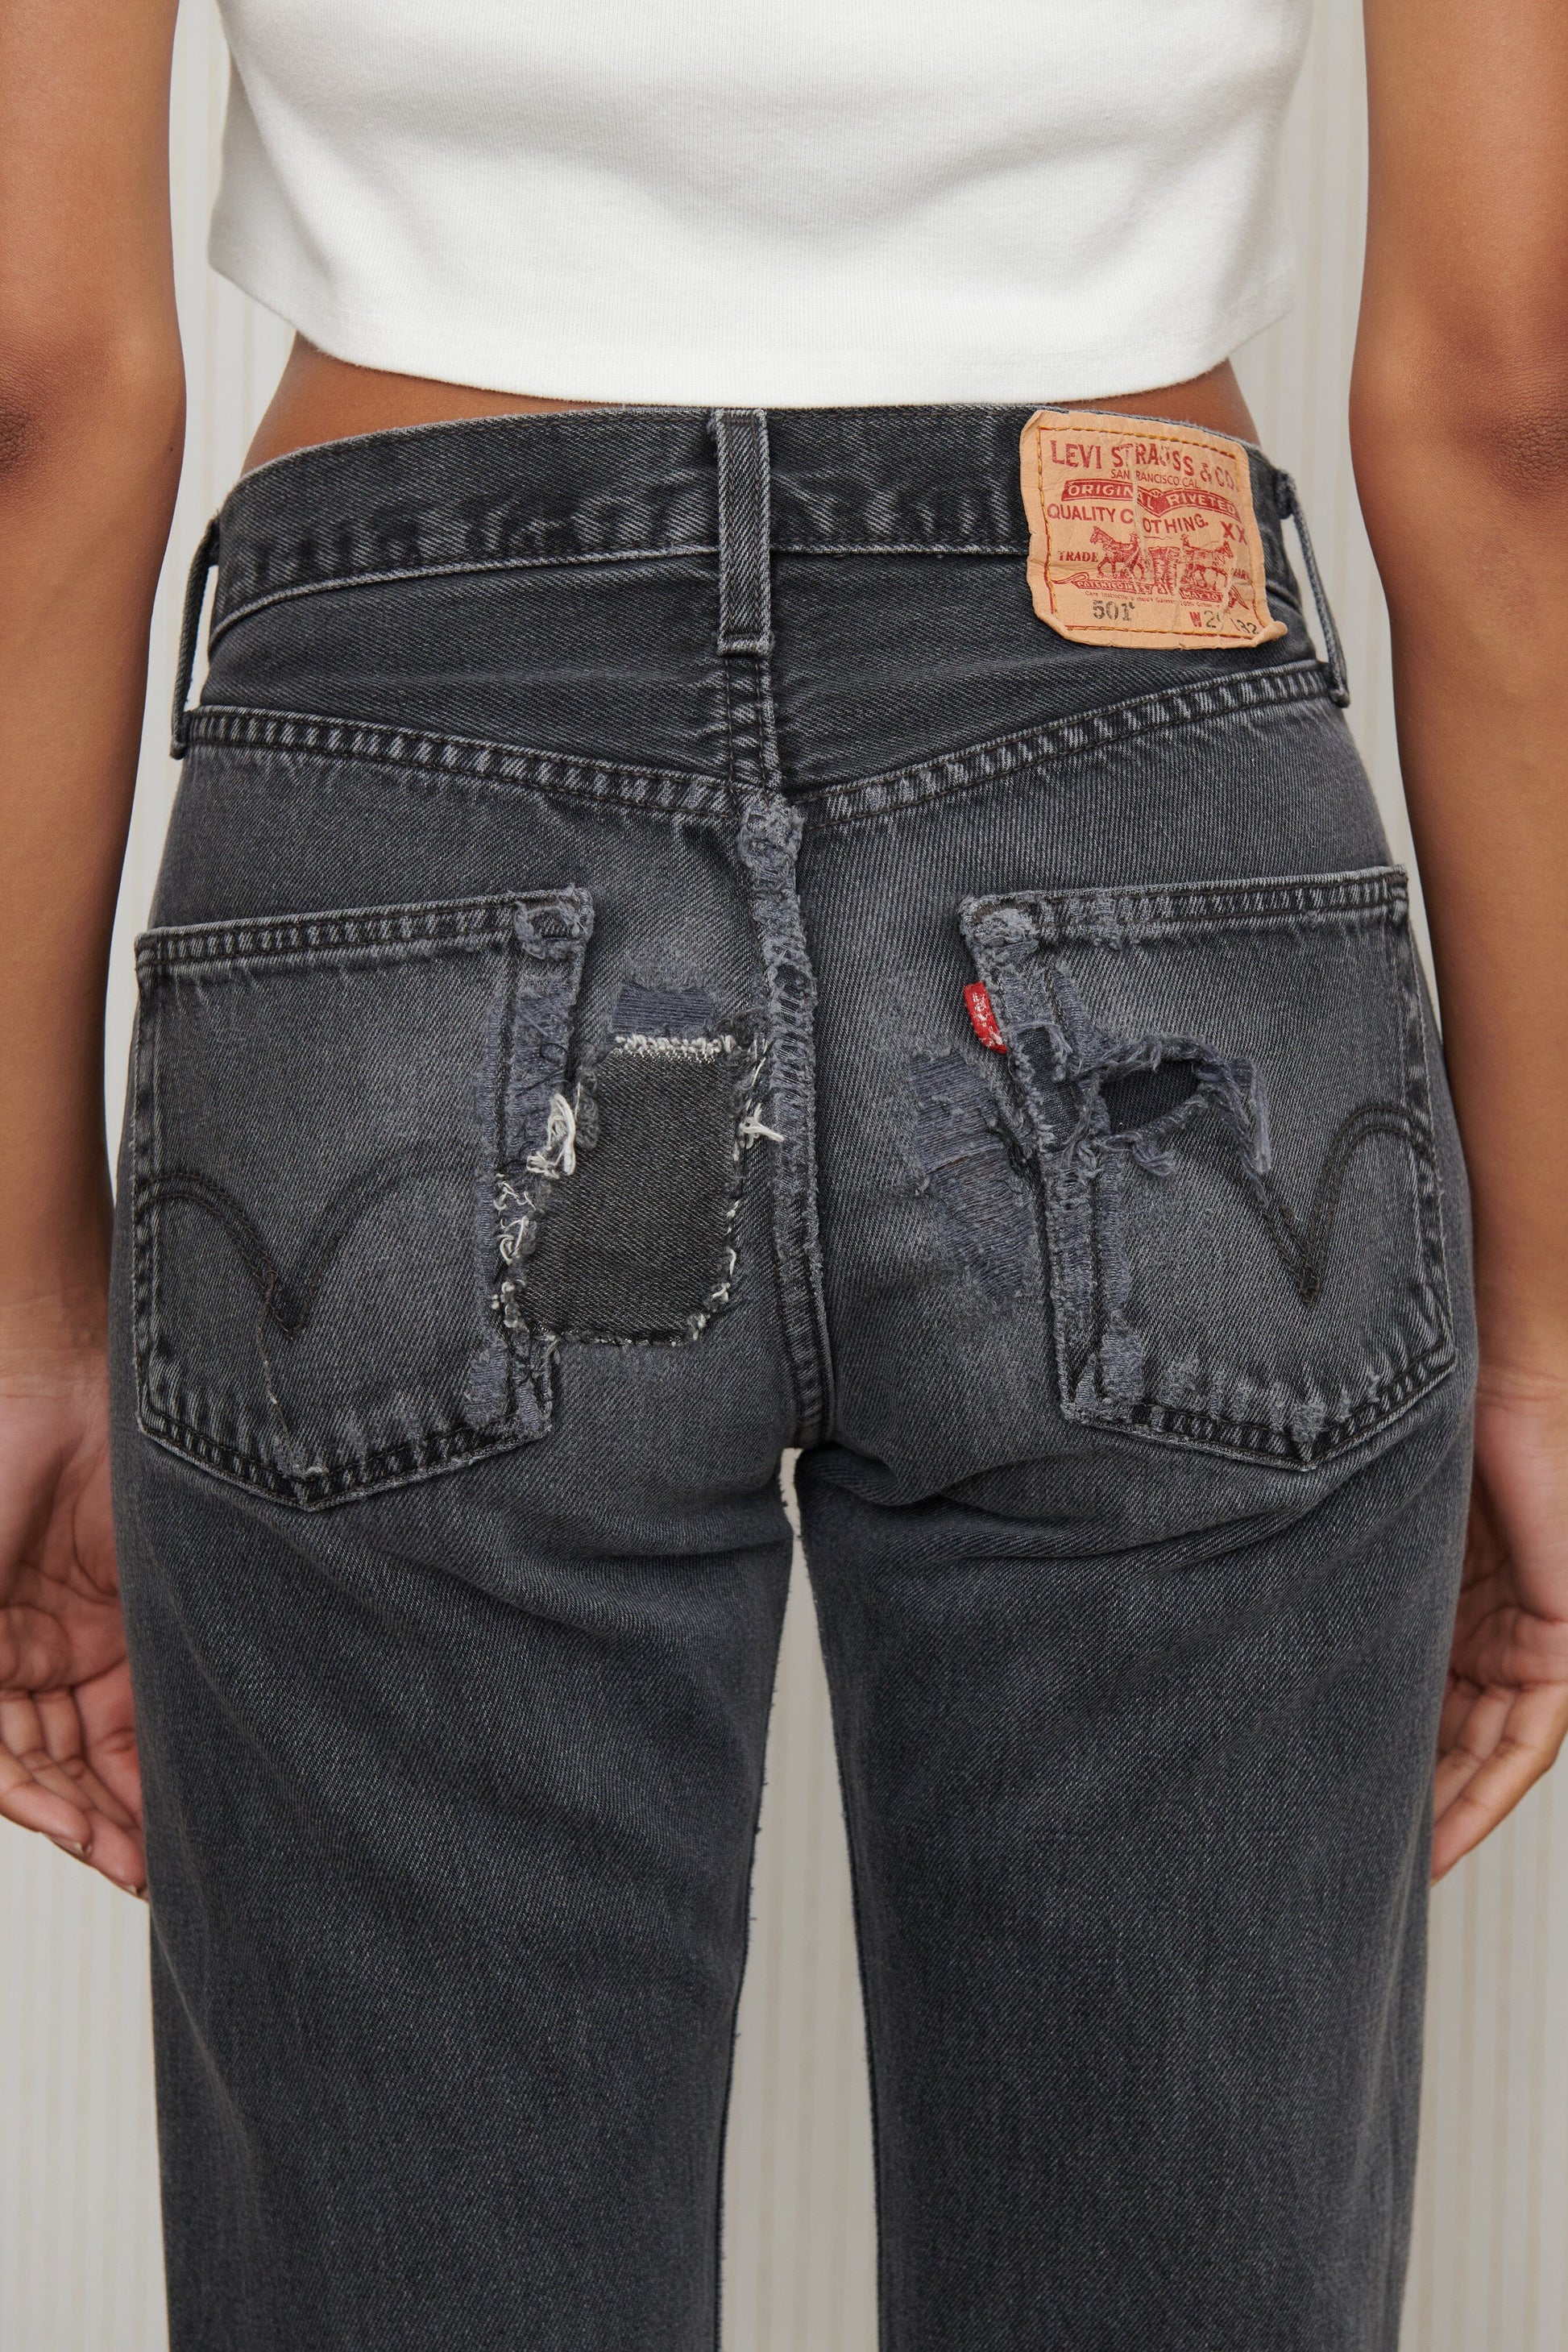 Levi's 501 Distressed Black Jeans SZ 28 Pant Levi's